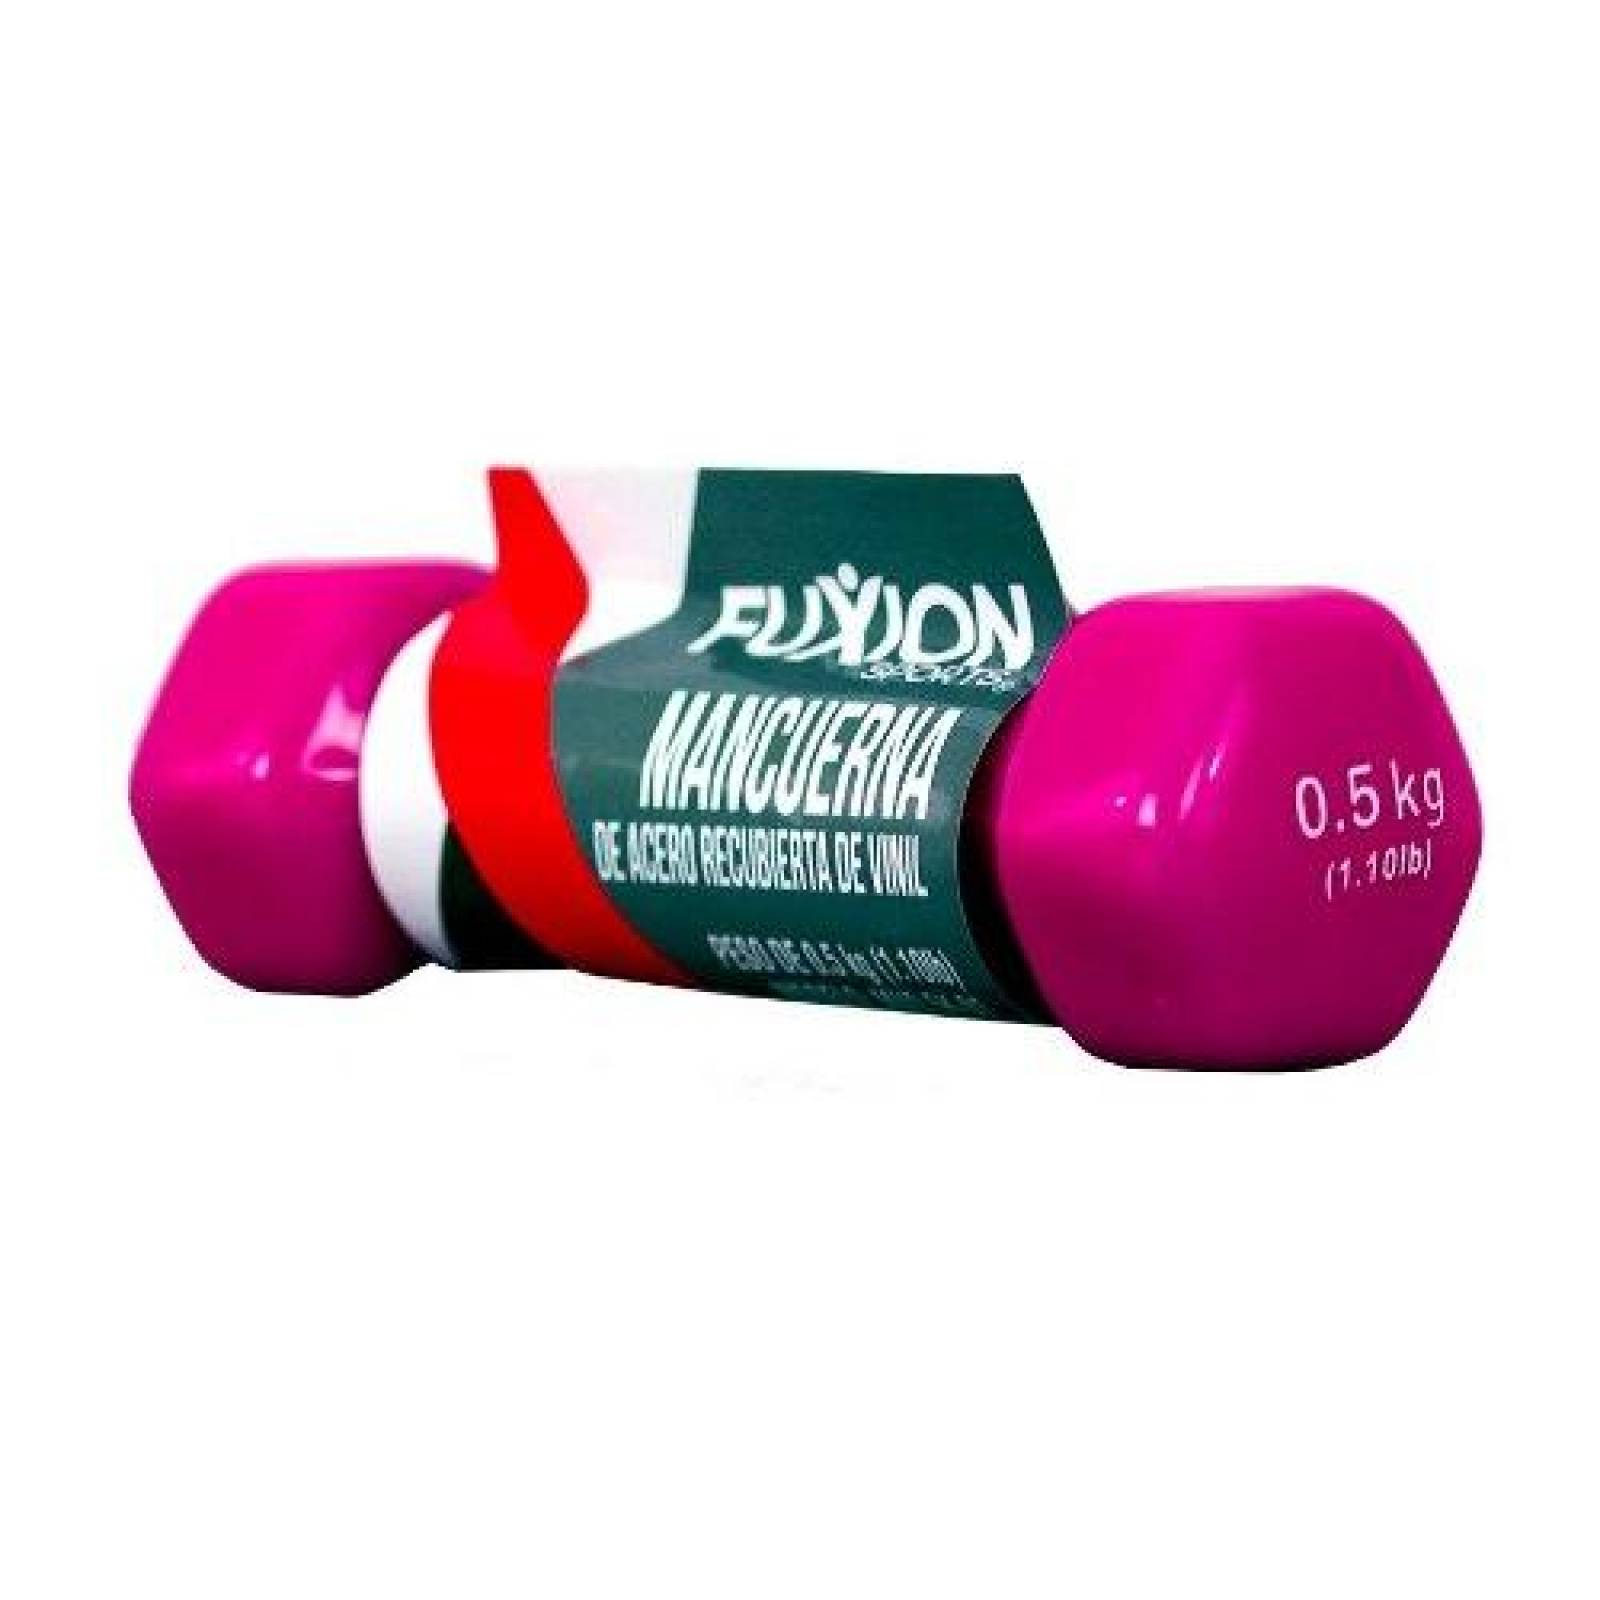 Mancuerna acero cubierta vinil 0.5 Kg Fuxion Sports MV0.5K-01 -Rosa(CL) 